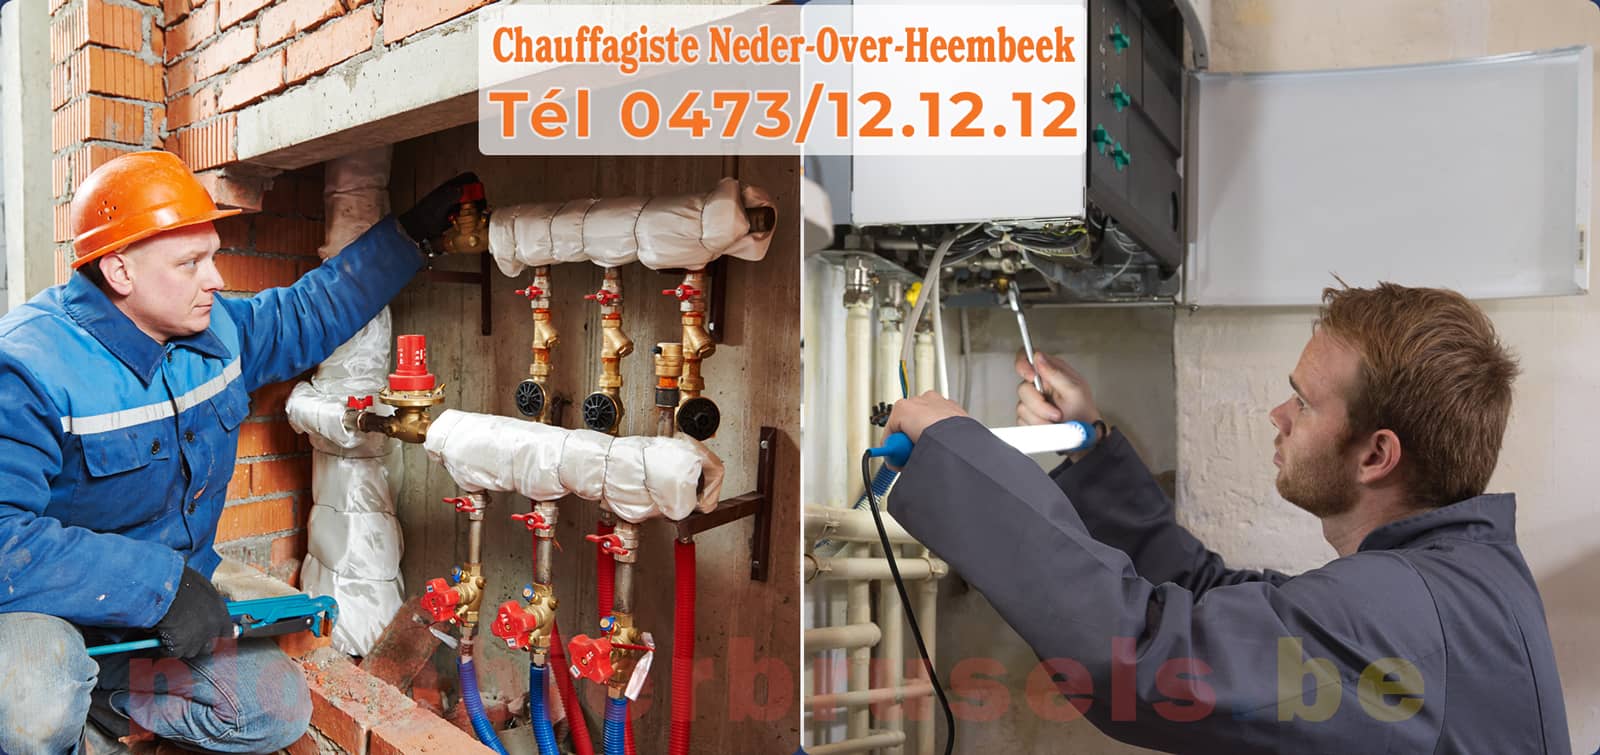 Chauffagiste Neder-Over-Heembeek service de Chauffage tél 0473/12.12.12